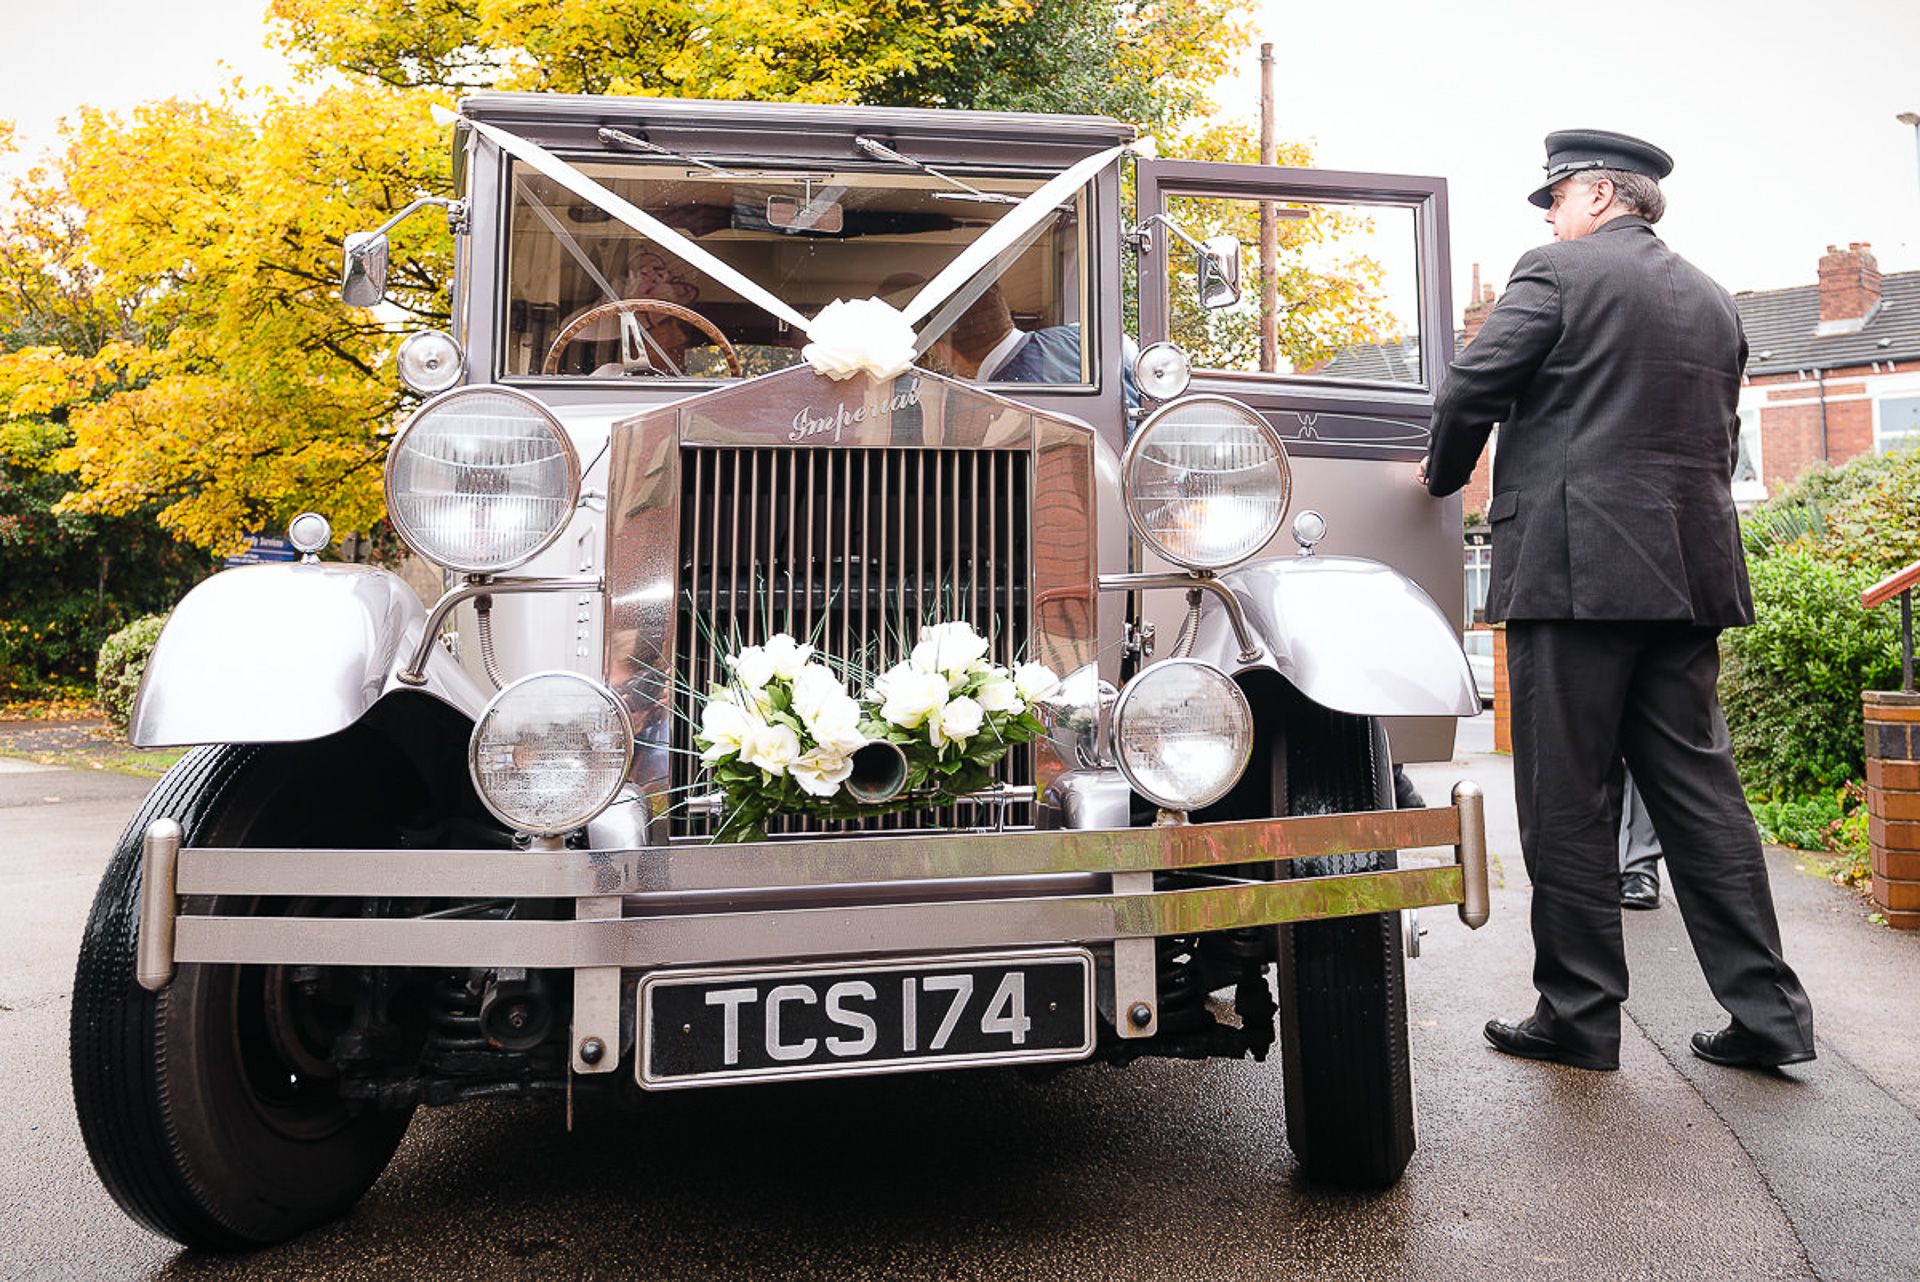 the wedding car arrives at the church